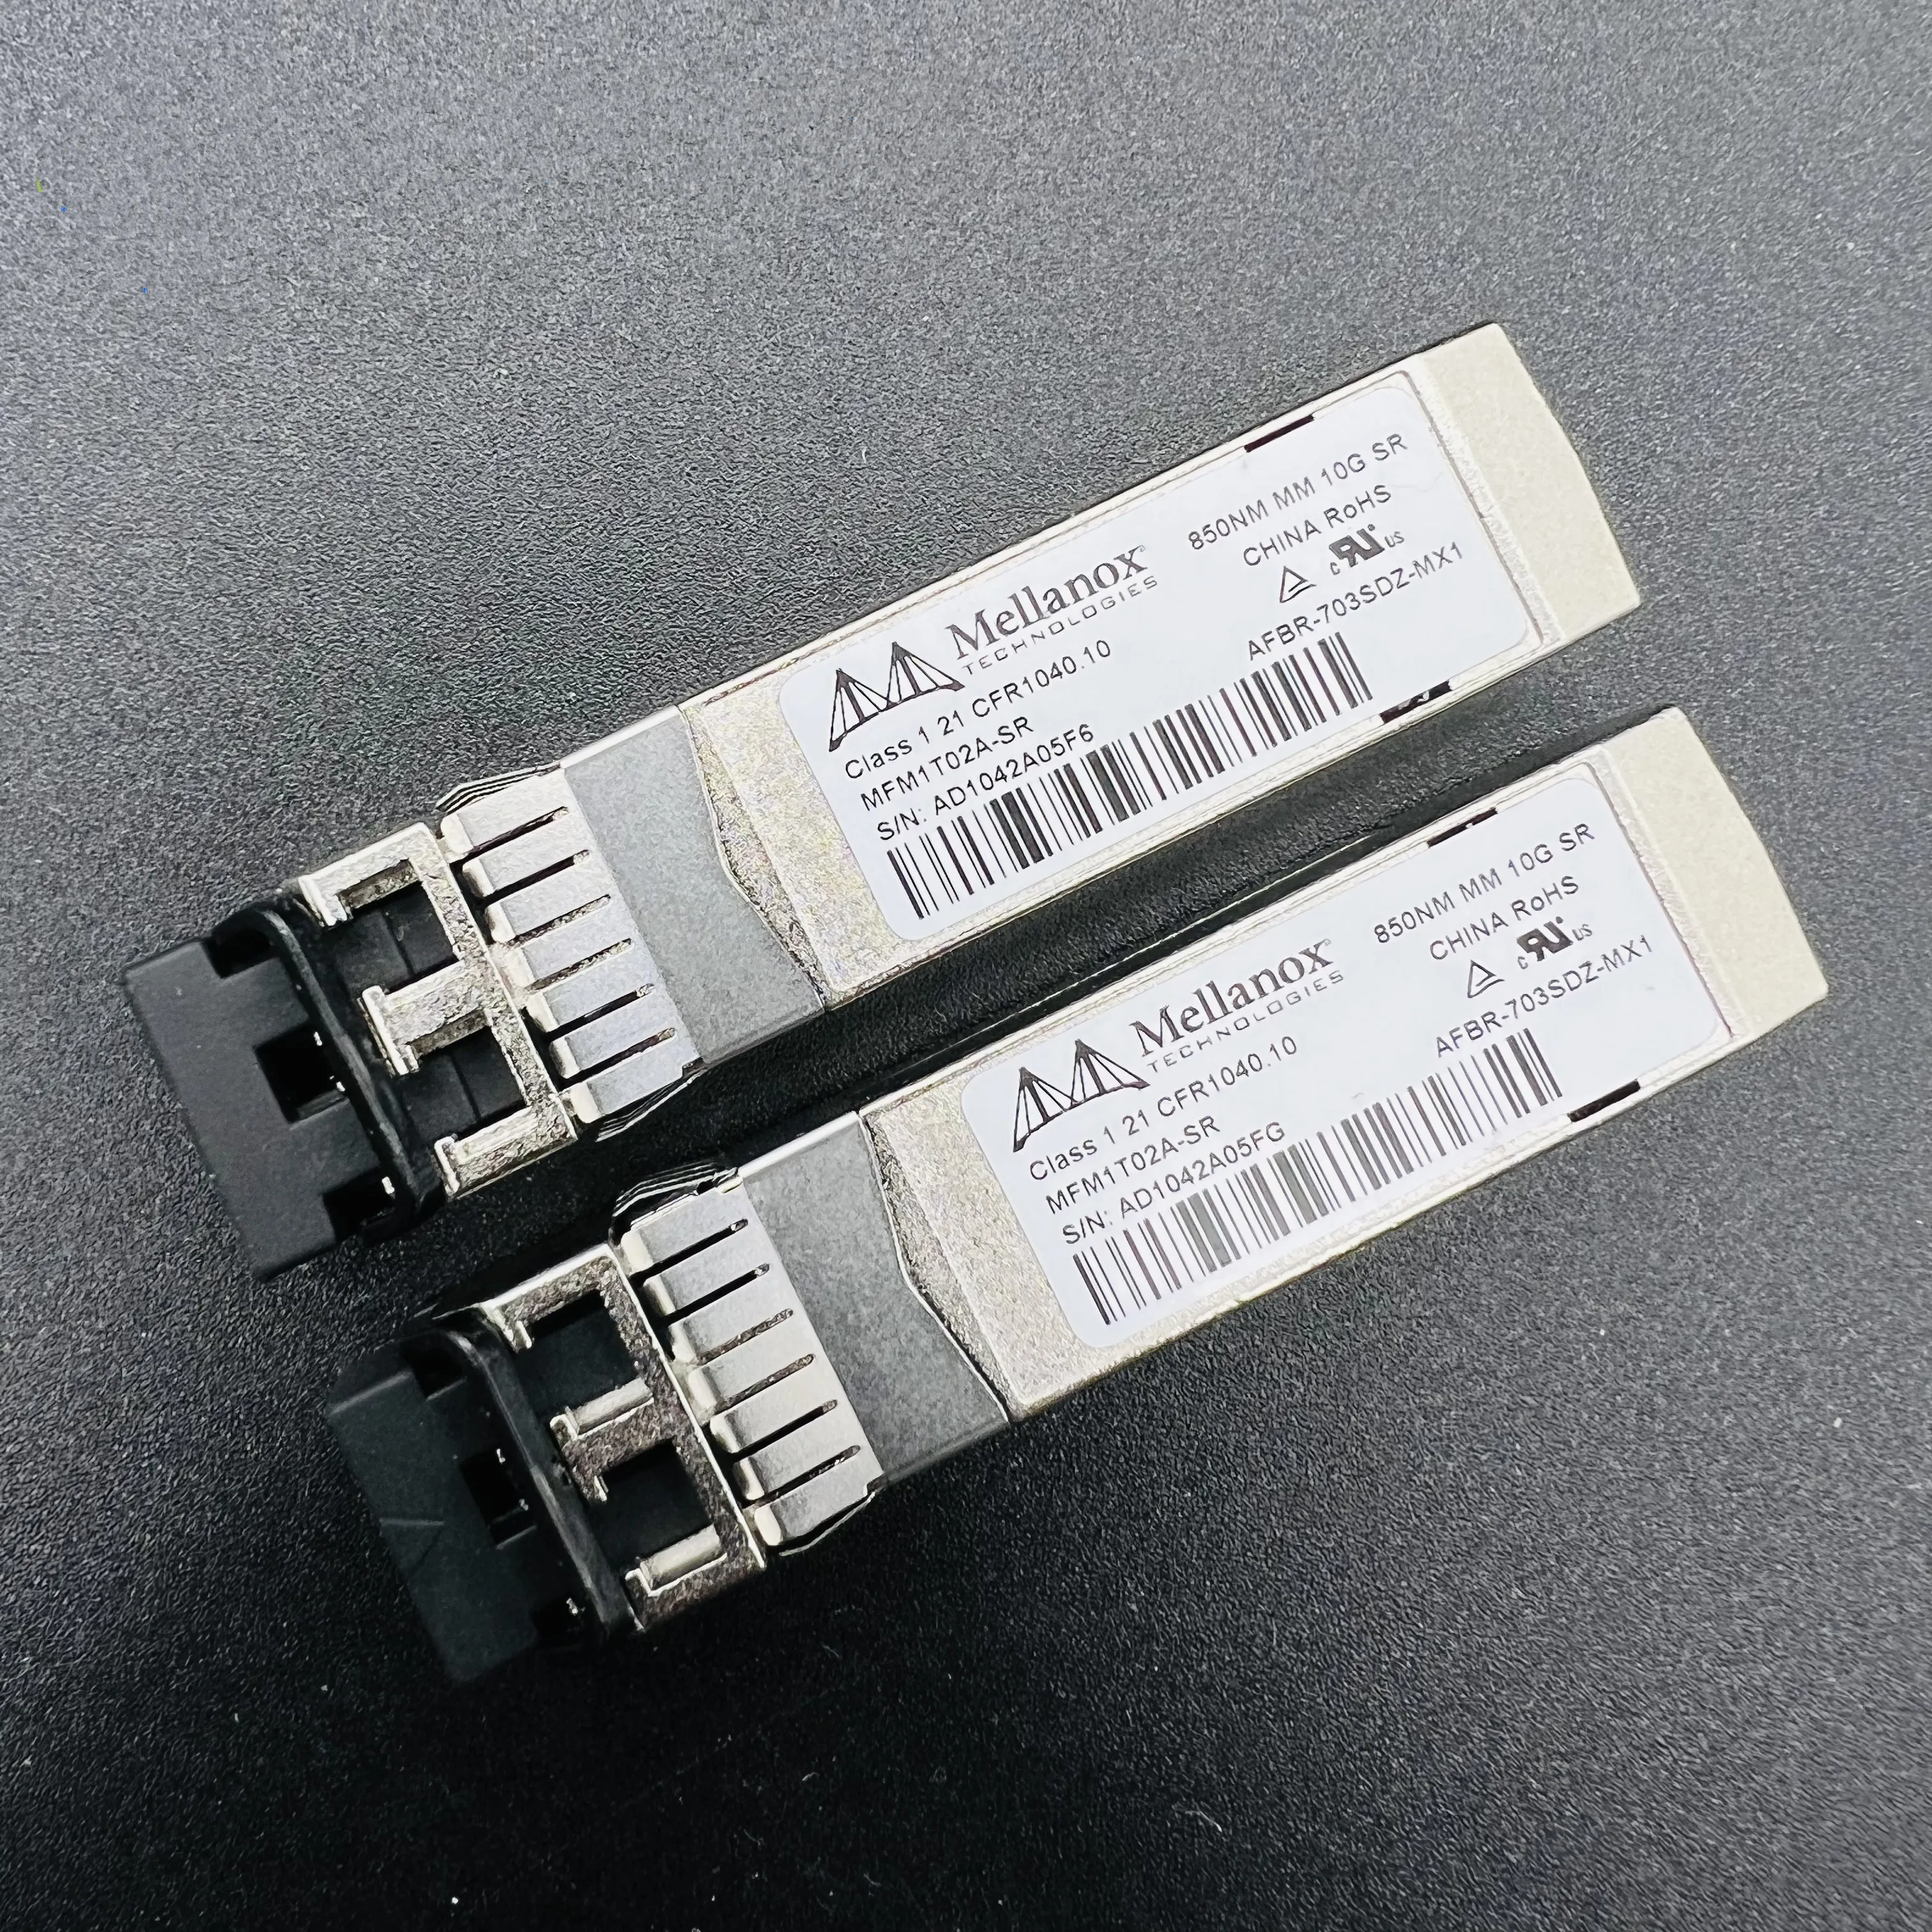 Mellanox MFM1T02A-SR AFBR-703SDZ-MX1 850NM MM 10G SR mellanox 10g sfp+ switch/mellanox Transceiver/10g sfp/mellanox network card enlarge